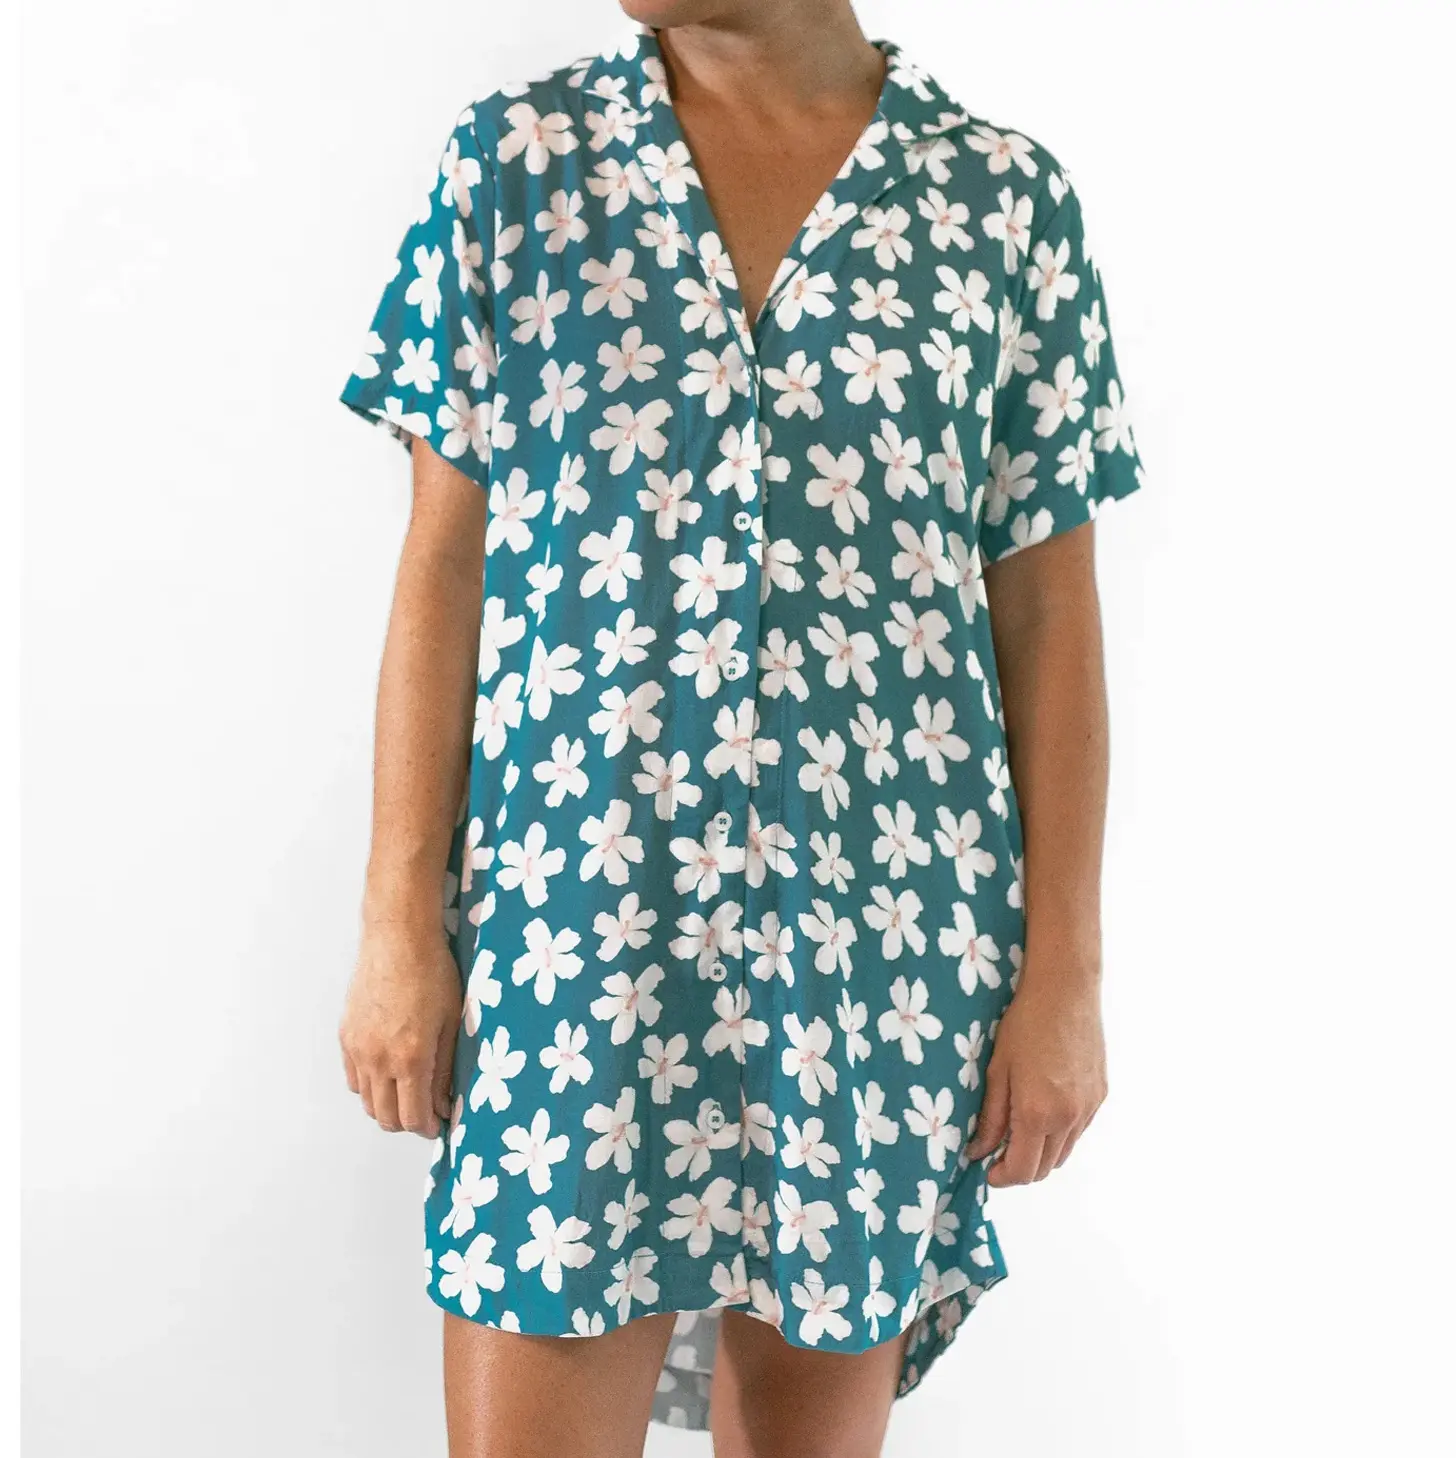 Usa Hot Selling Rayon Vrouwen T-Shirt Jurk Op Maat Van Uw Ontwerp Prints Knoop Up Shirt Jurk